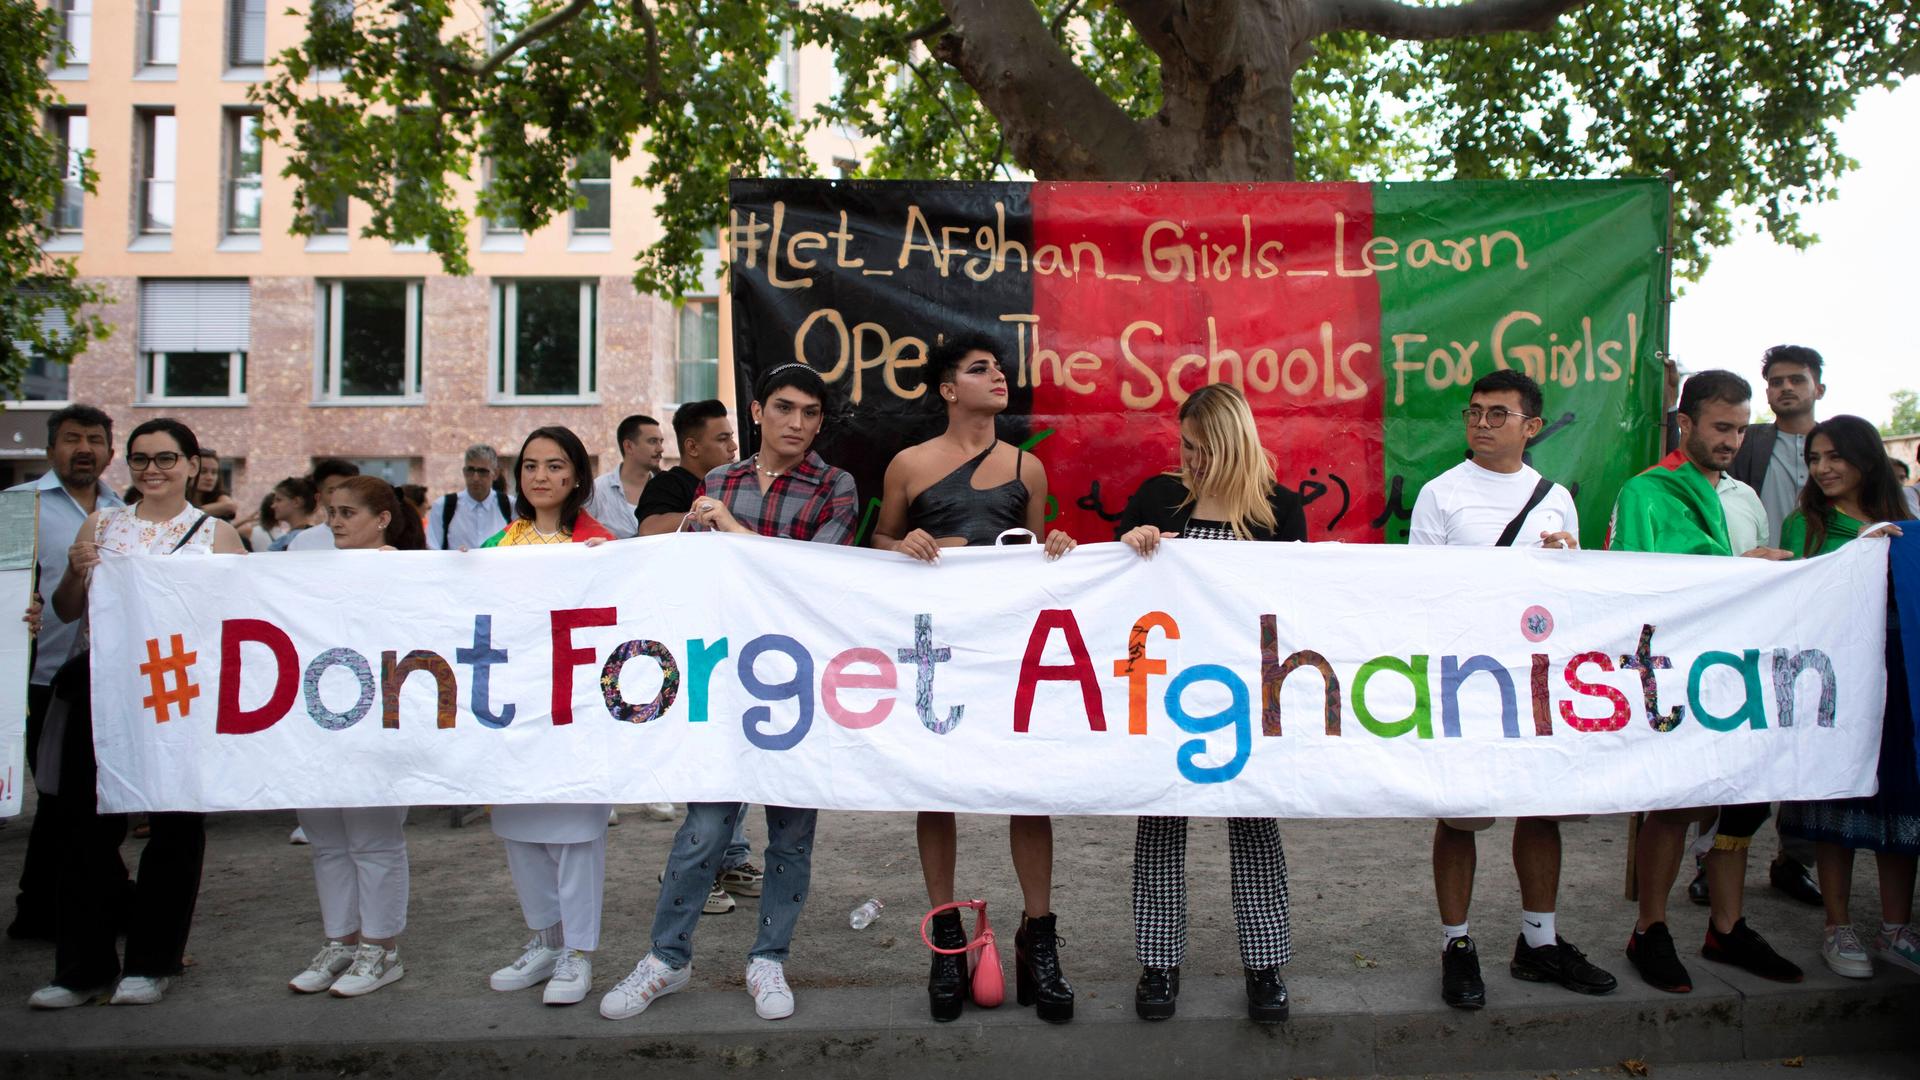 Solidaritätsdemo mit Afghanistan am 13.08.2022 in Berlin. "Don't forget Afghanistan" - Vergesst Afghanistan nicht - fordern die Demonstrierenden.